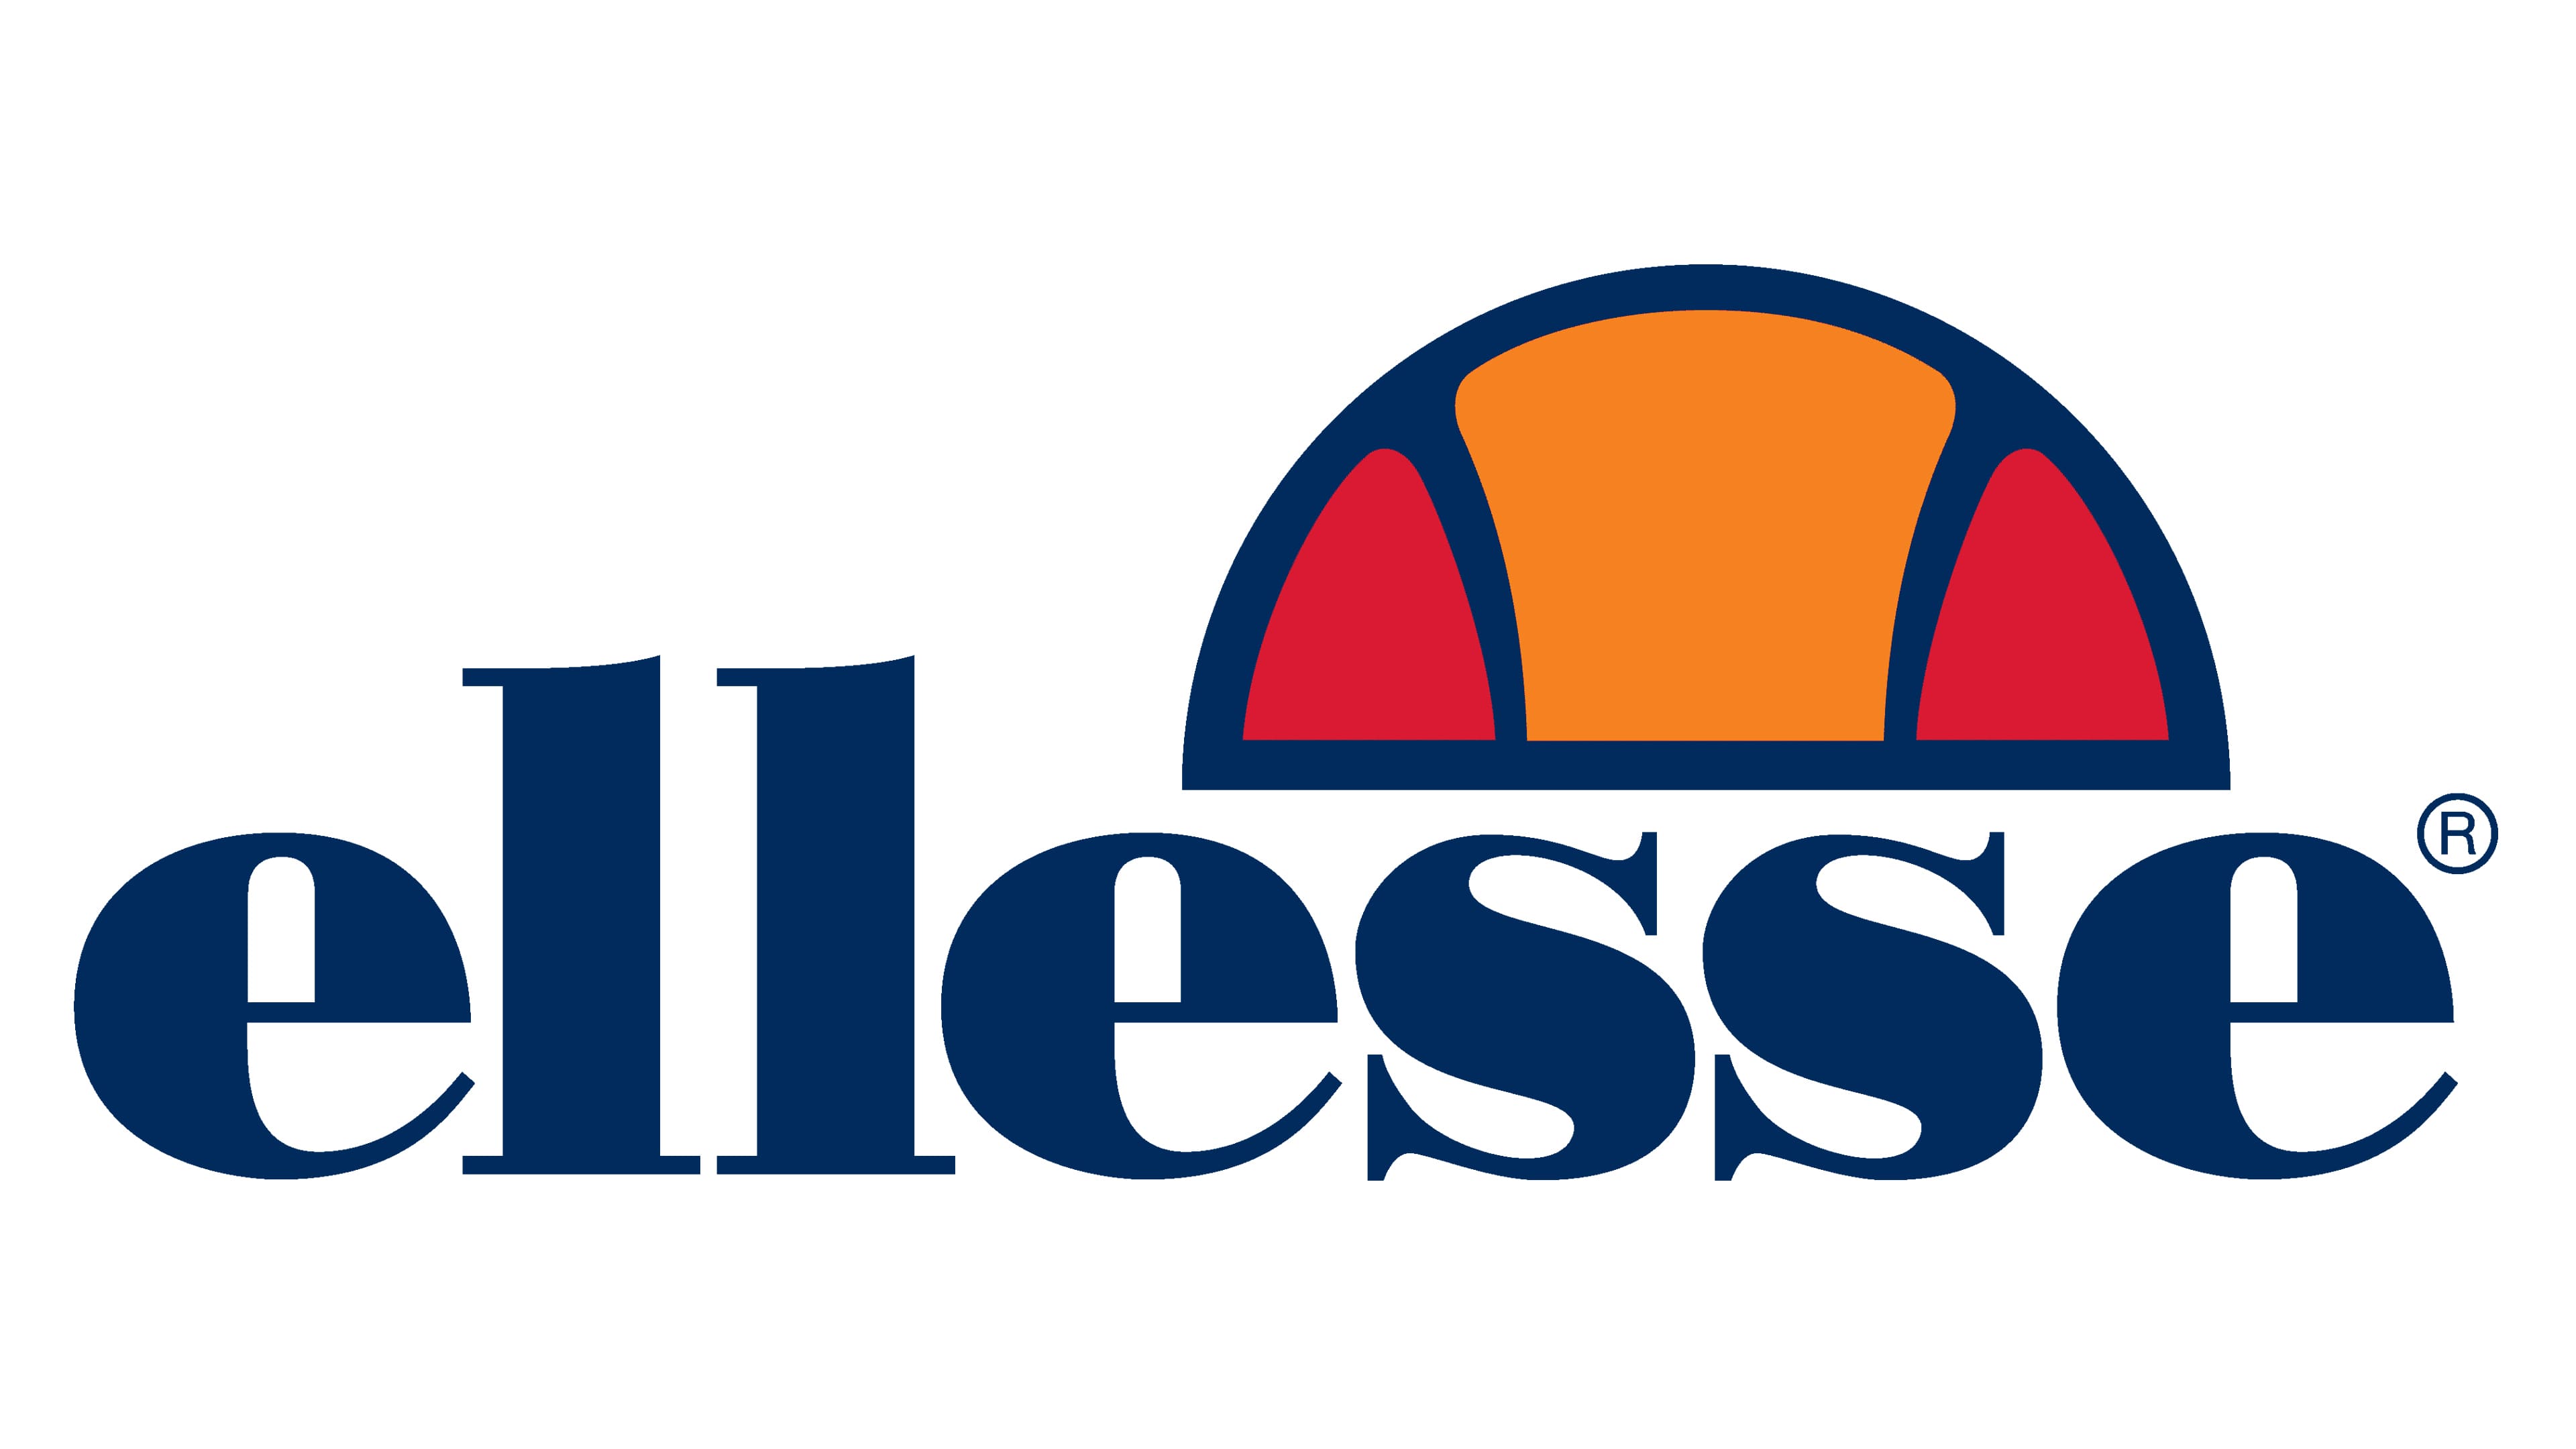 Ellesse Logo Brand Clothes Symbol Design Vector Illustration With